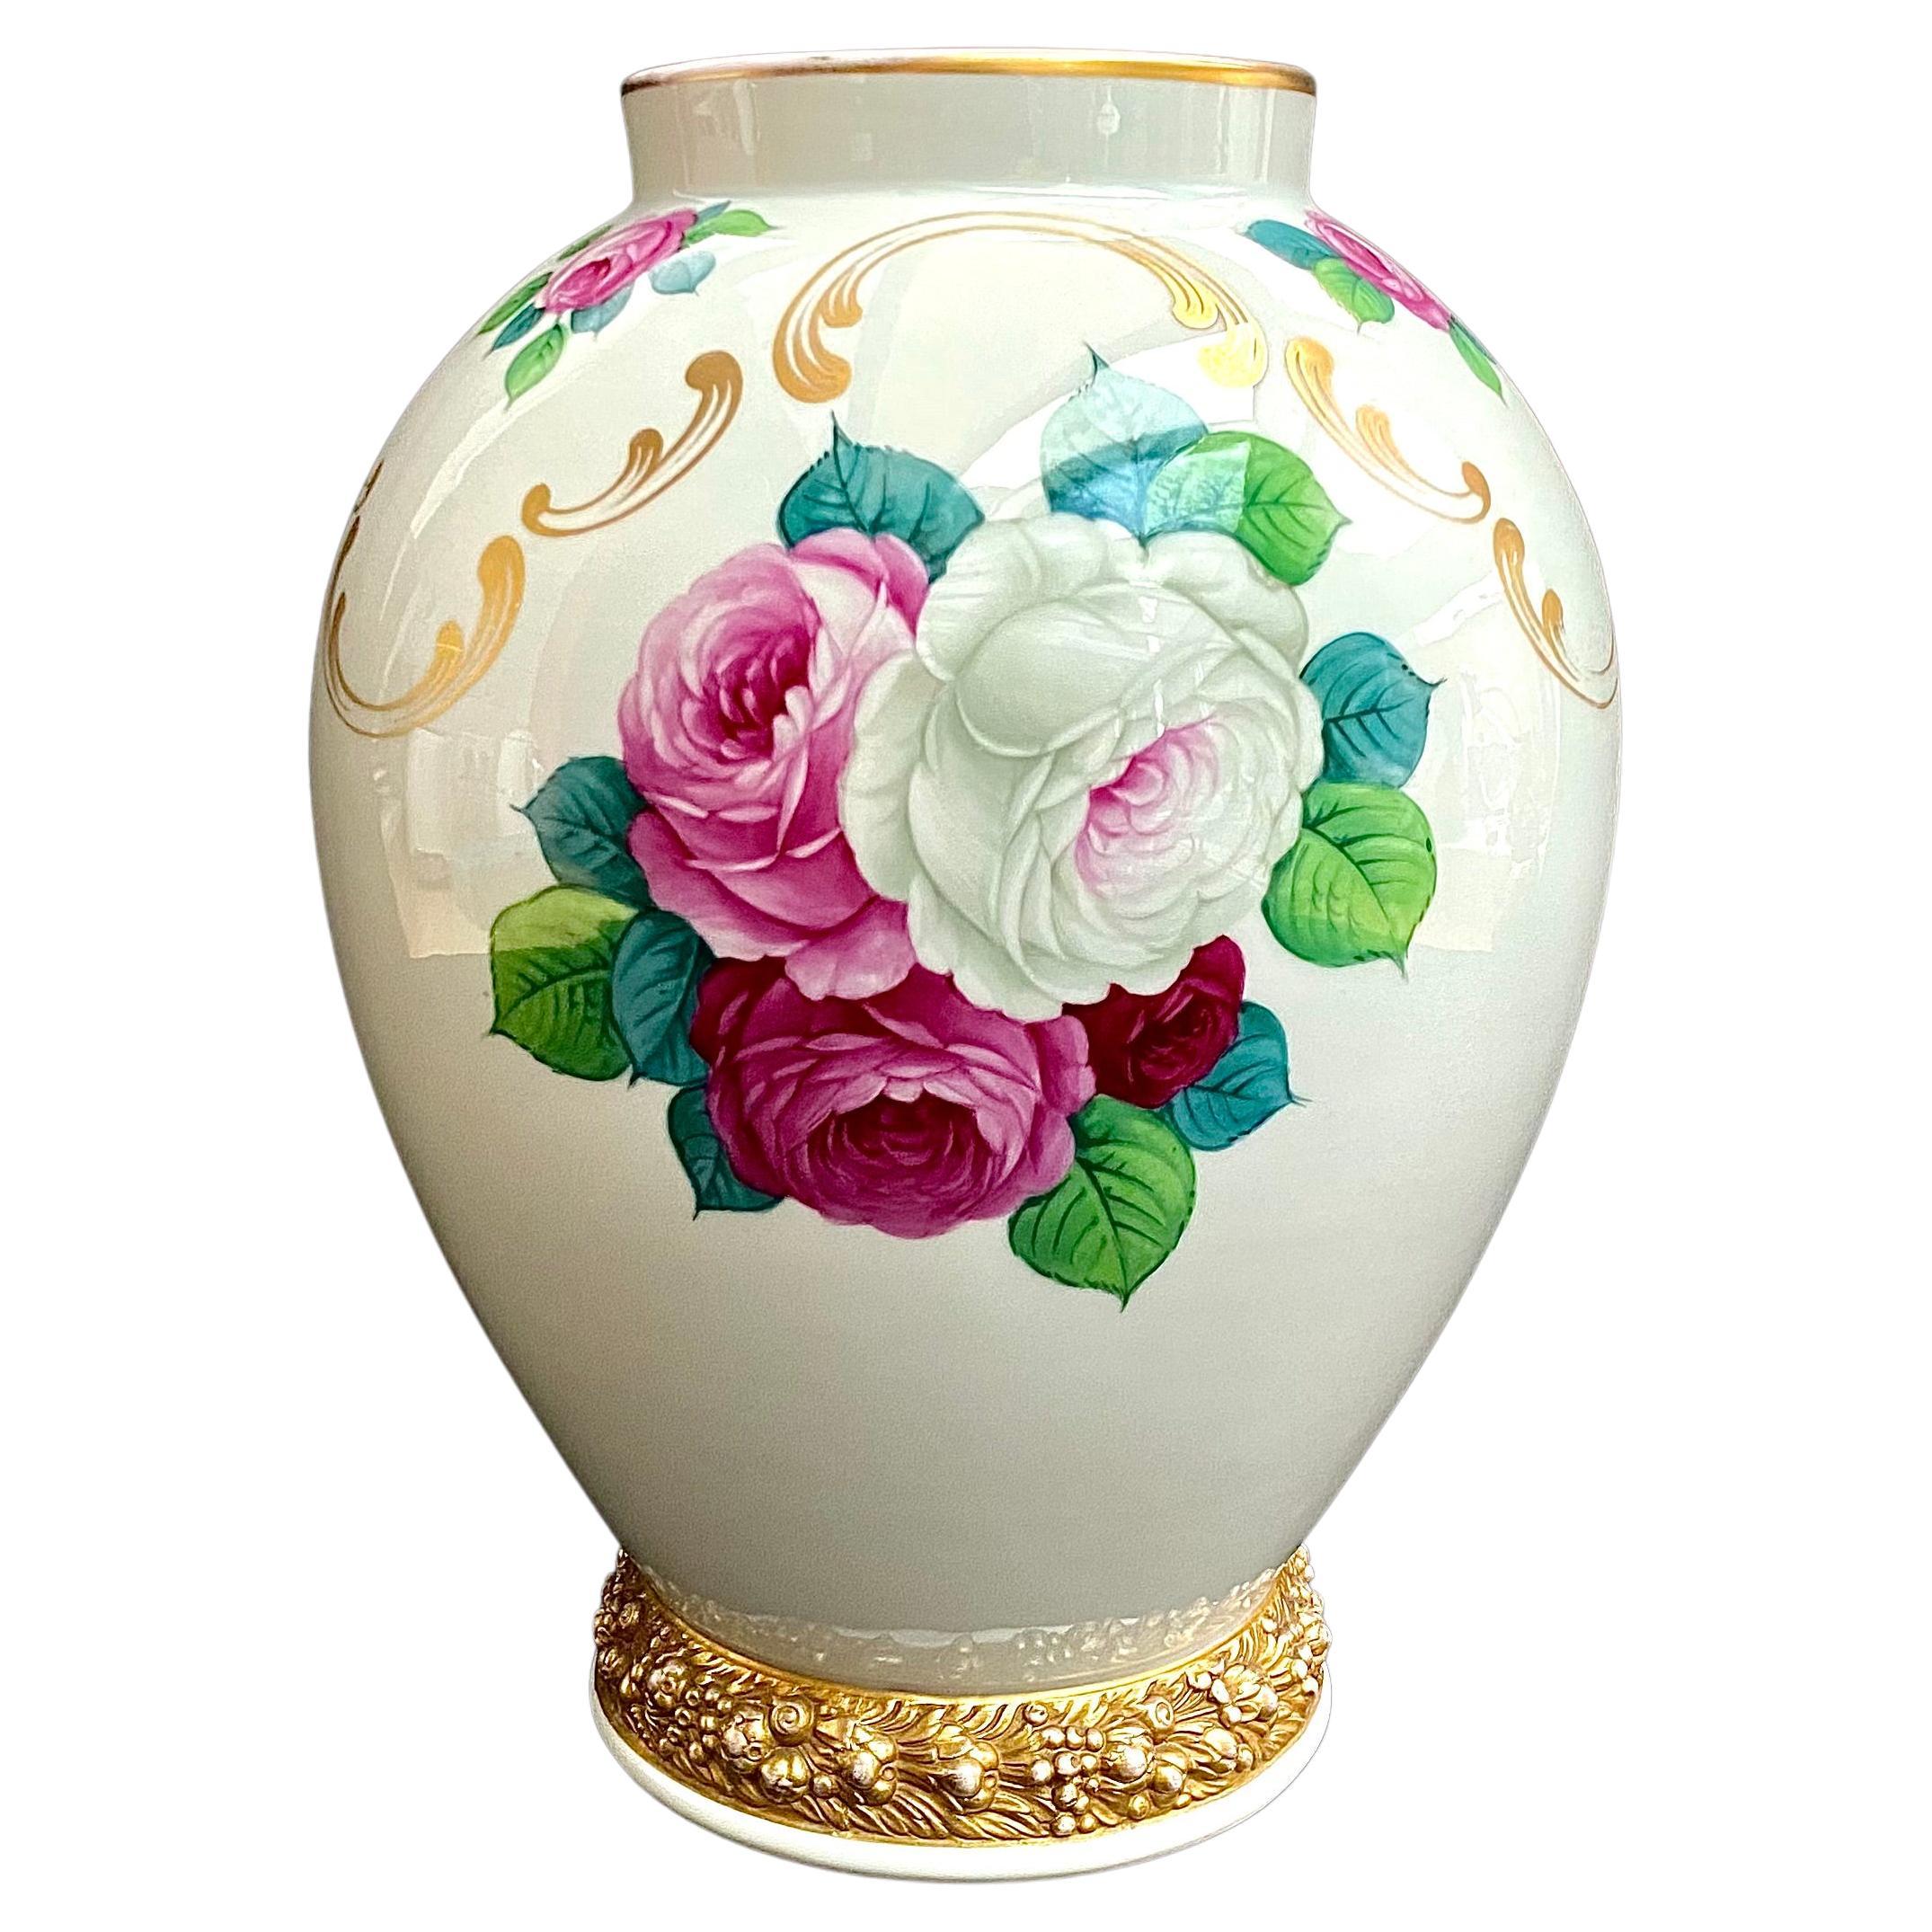 Antique Rosenthal Vase Art Nouveau Roses Jardiniere Signed Floral Vase 1920s